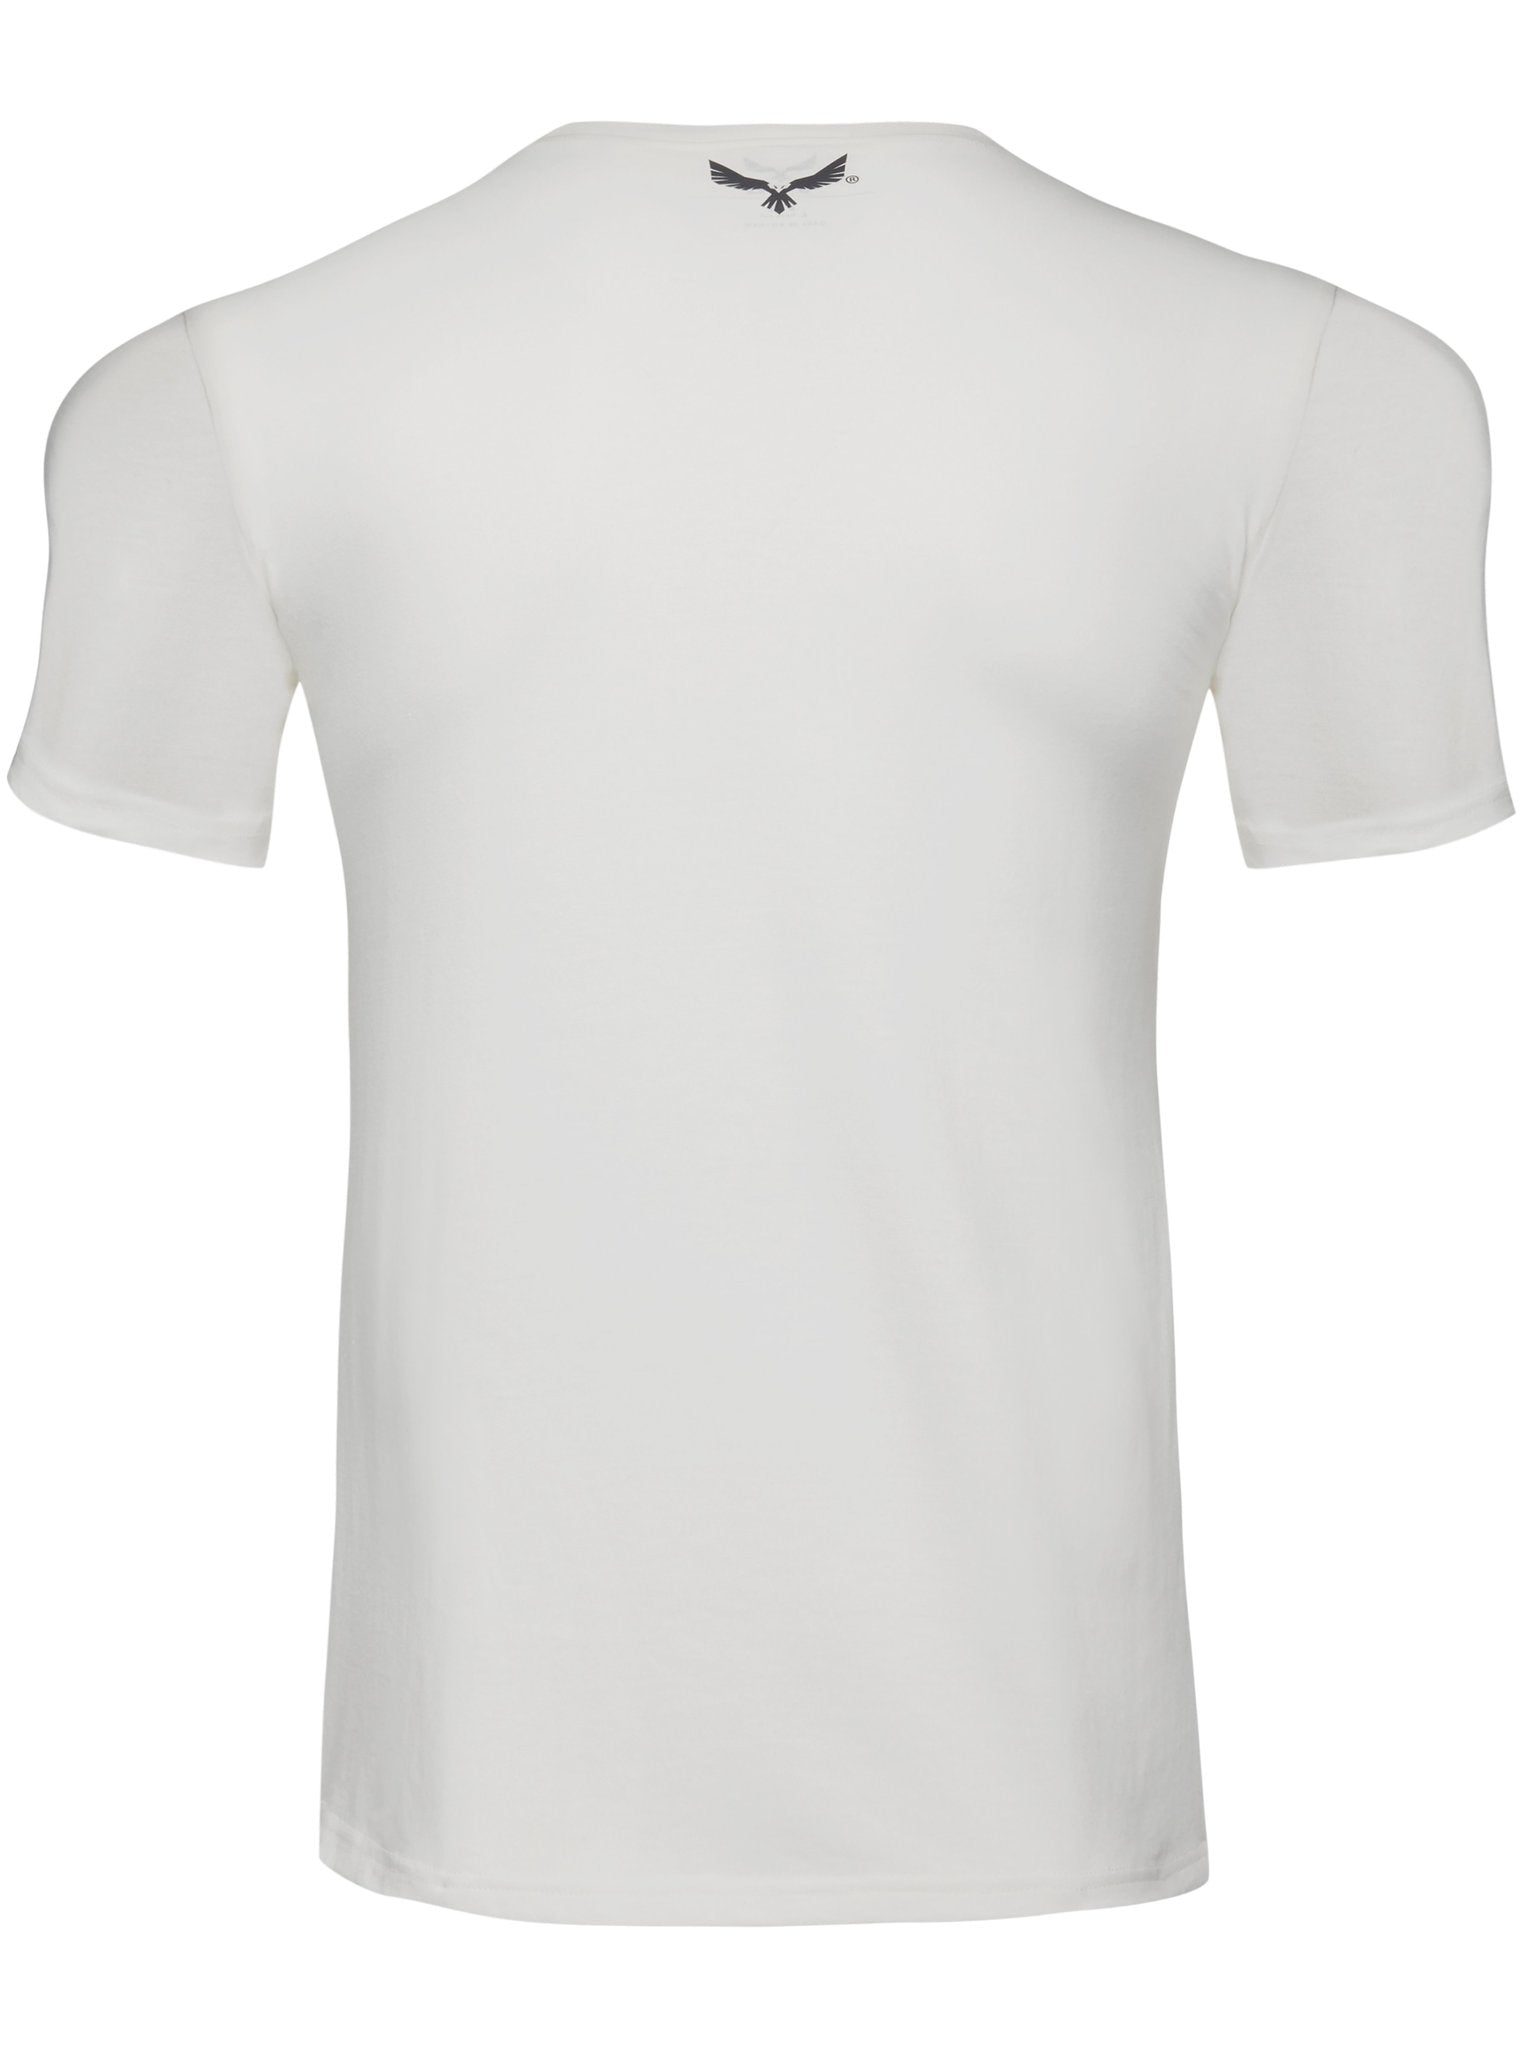 Invictus T-Shirt - Bright White